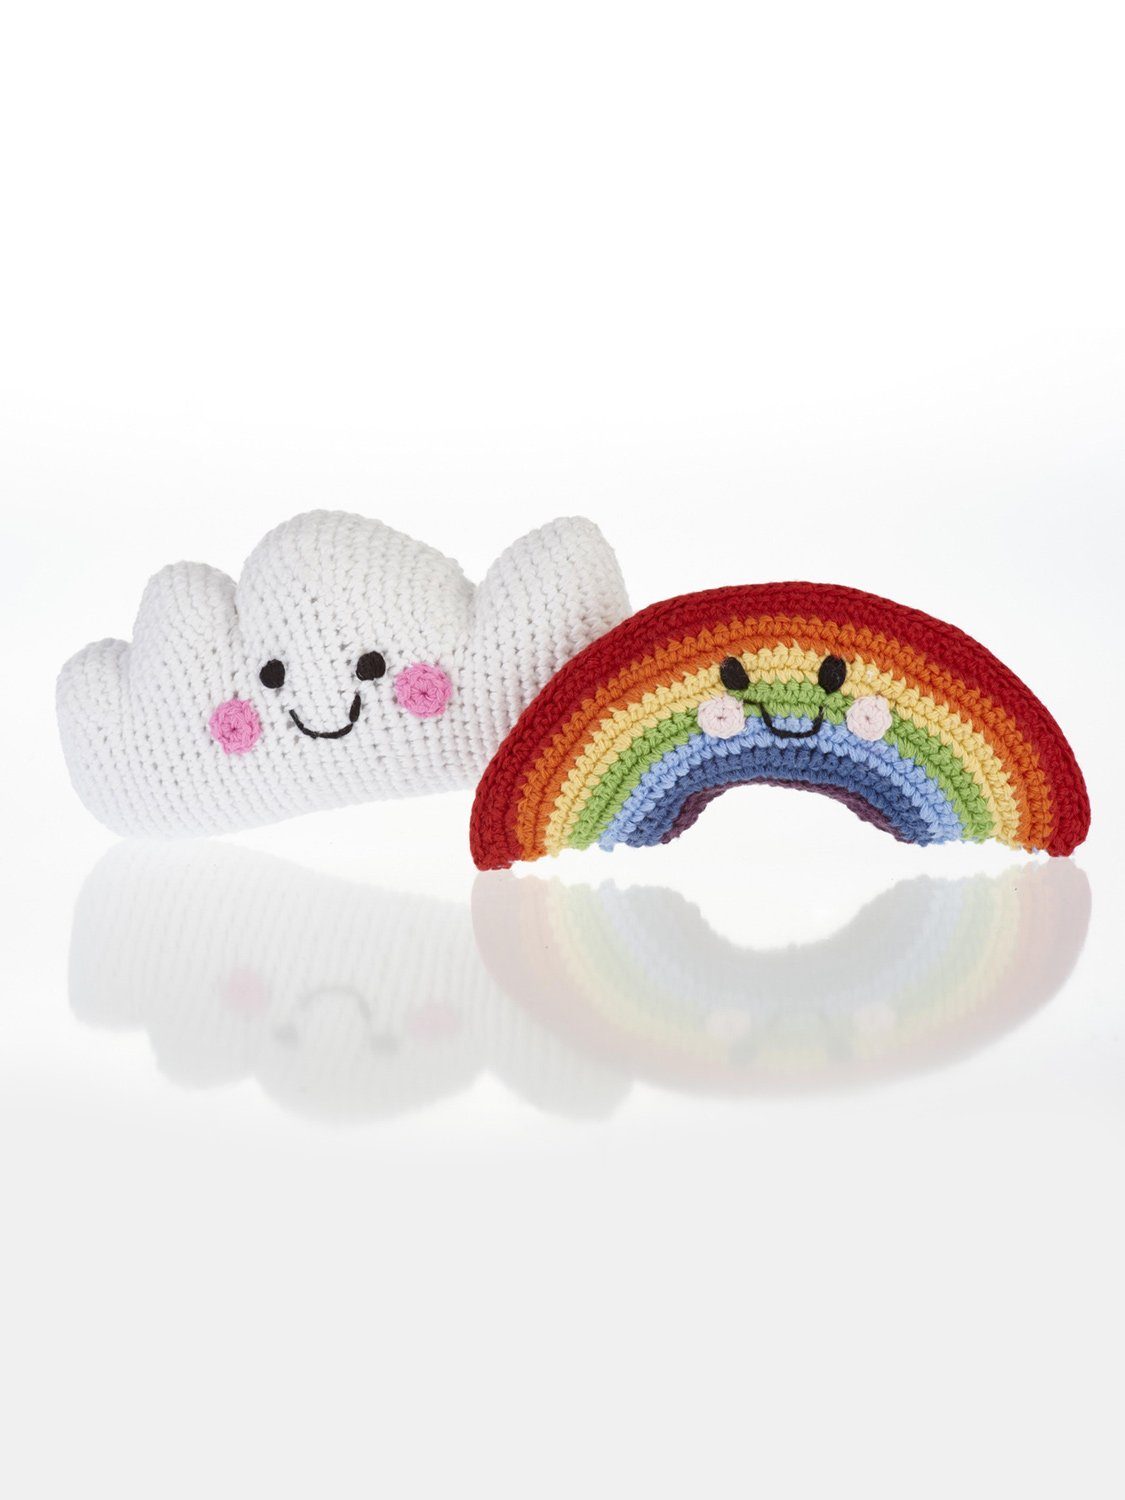 Smiley Cloud Crochet Fair Trade Rattle Toy - Rattle - Pebble Toys